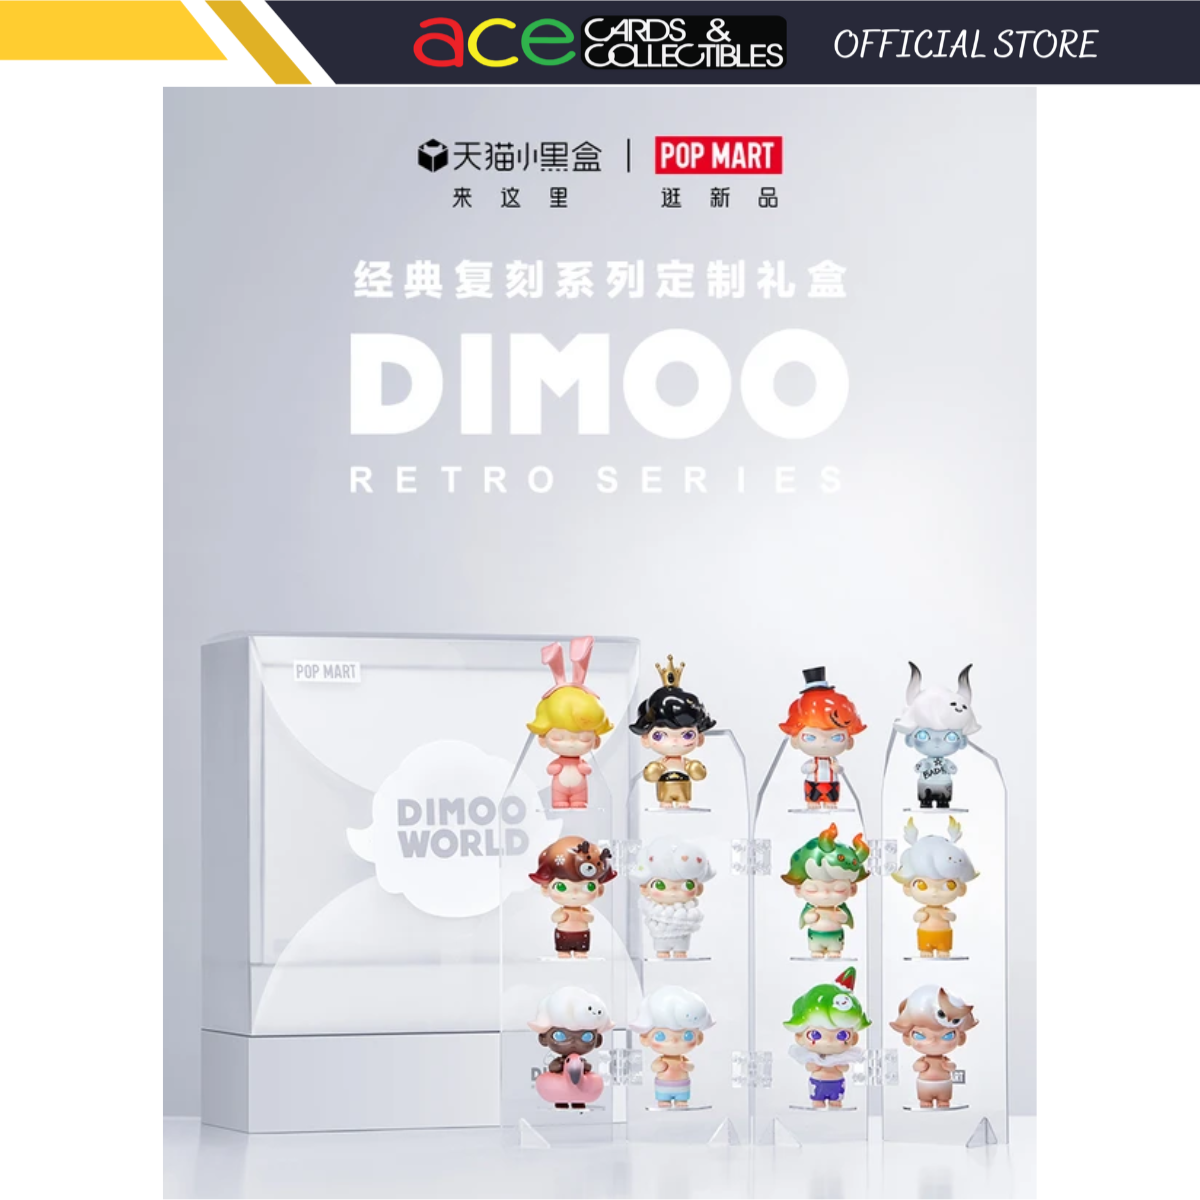 POP MART Dimoo Retro Series-Single Box (Random)-Pop Mart-Ace Cards & Collectibles